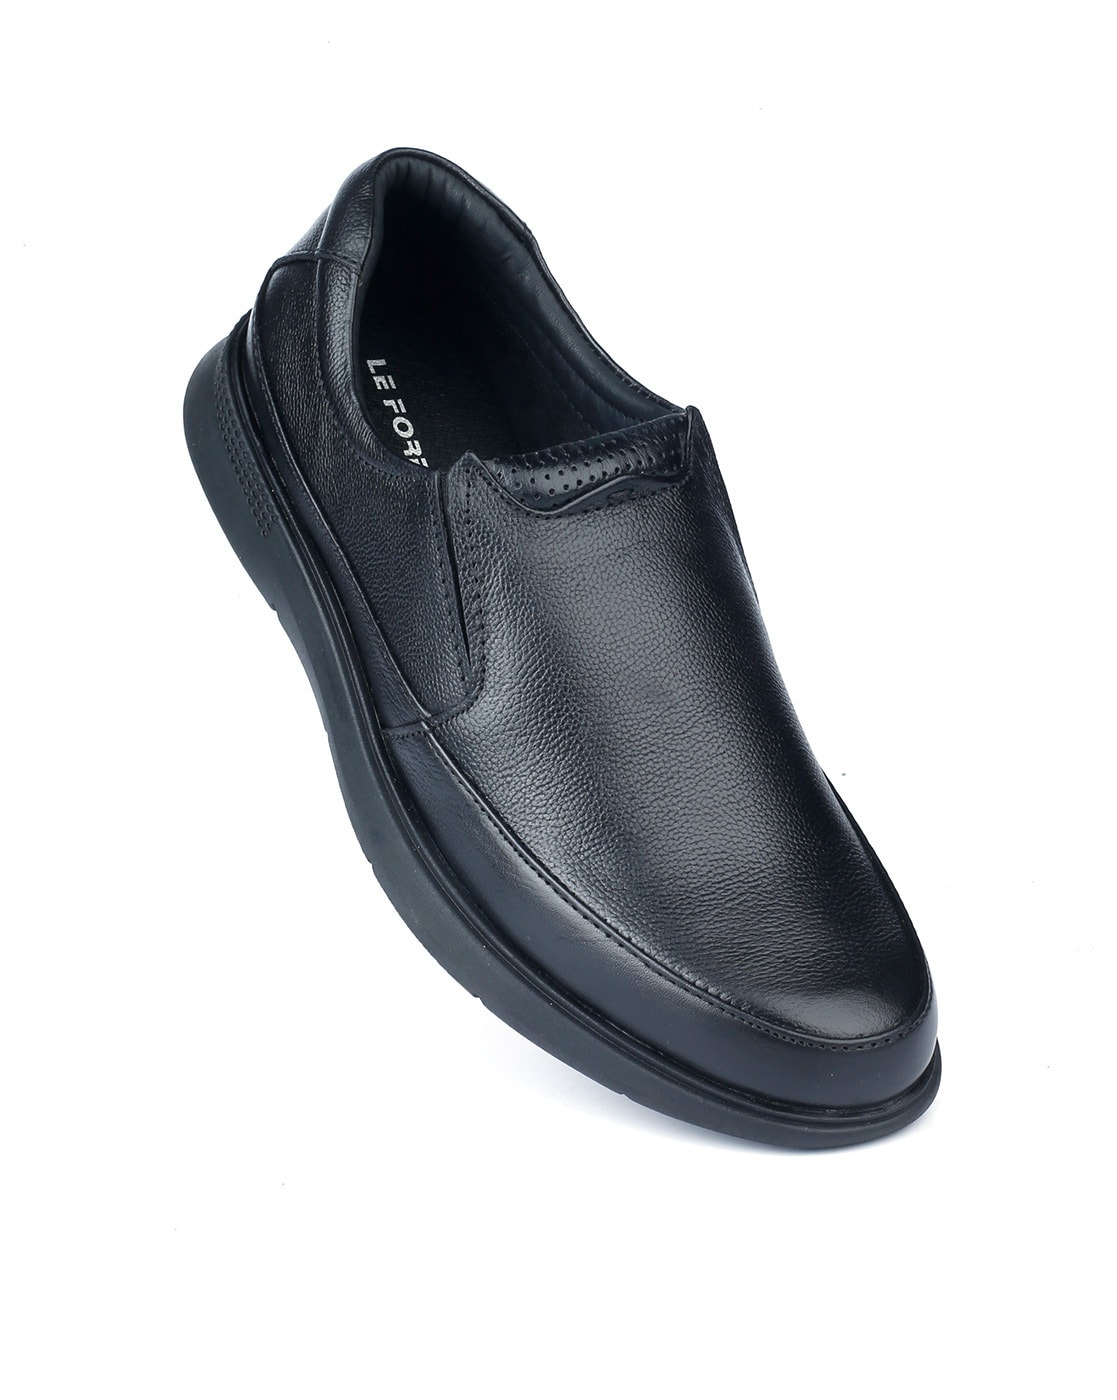 Men Summer Breathable Pu Leather Shoes Casual Flat Heel Slip On Comfort  Sandals | eBay